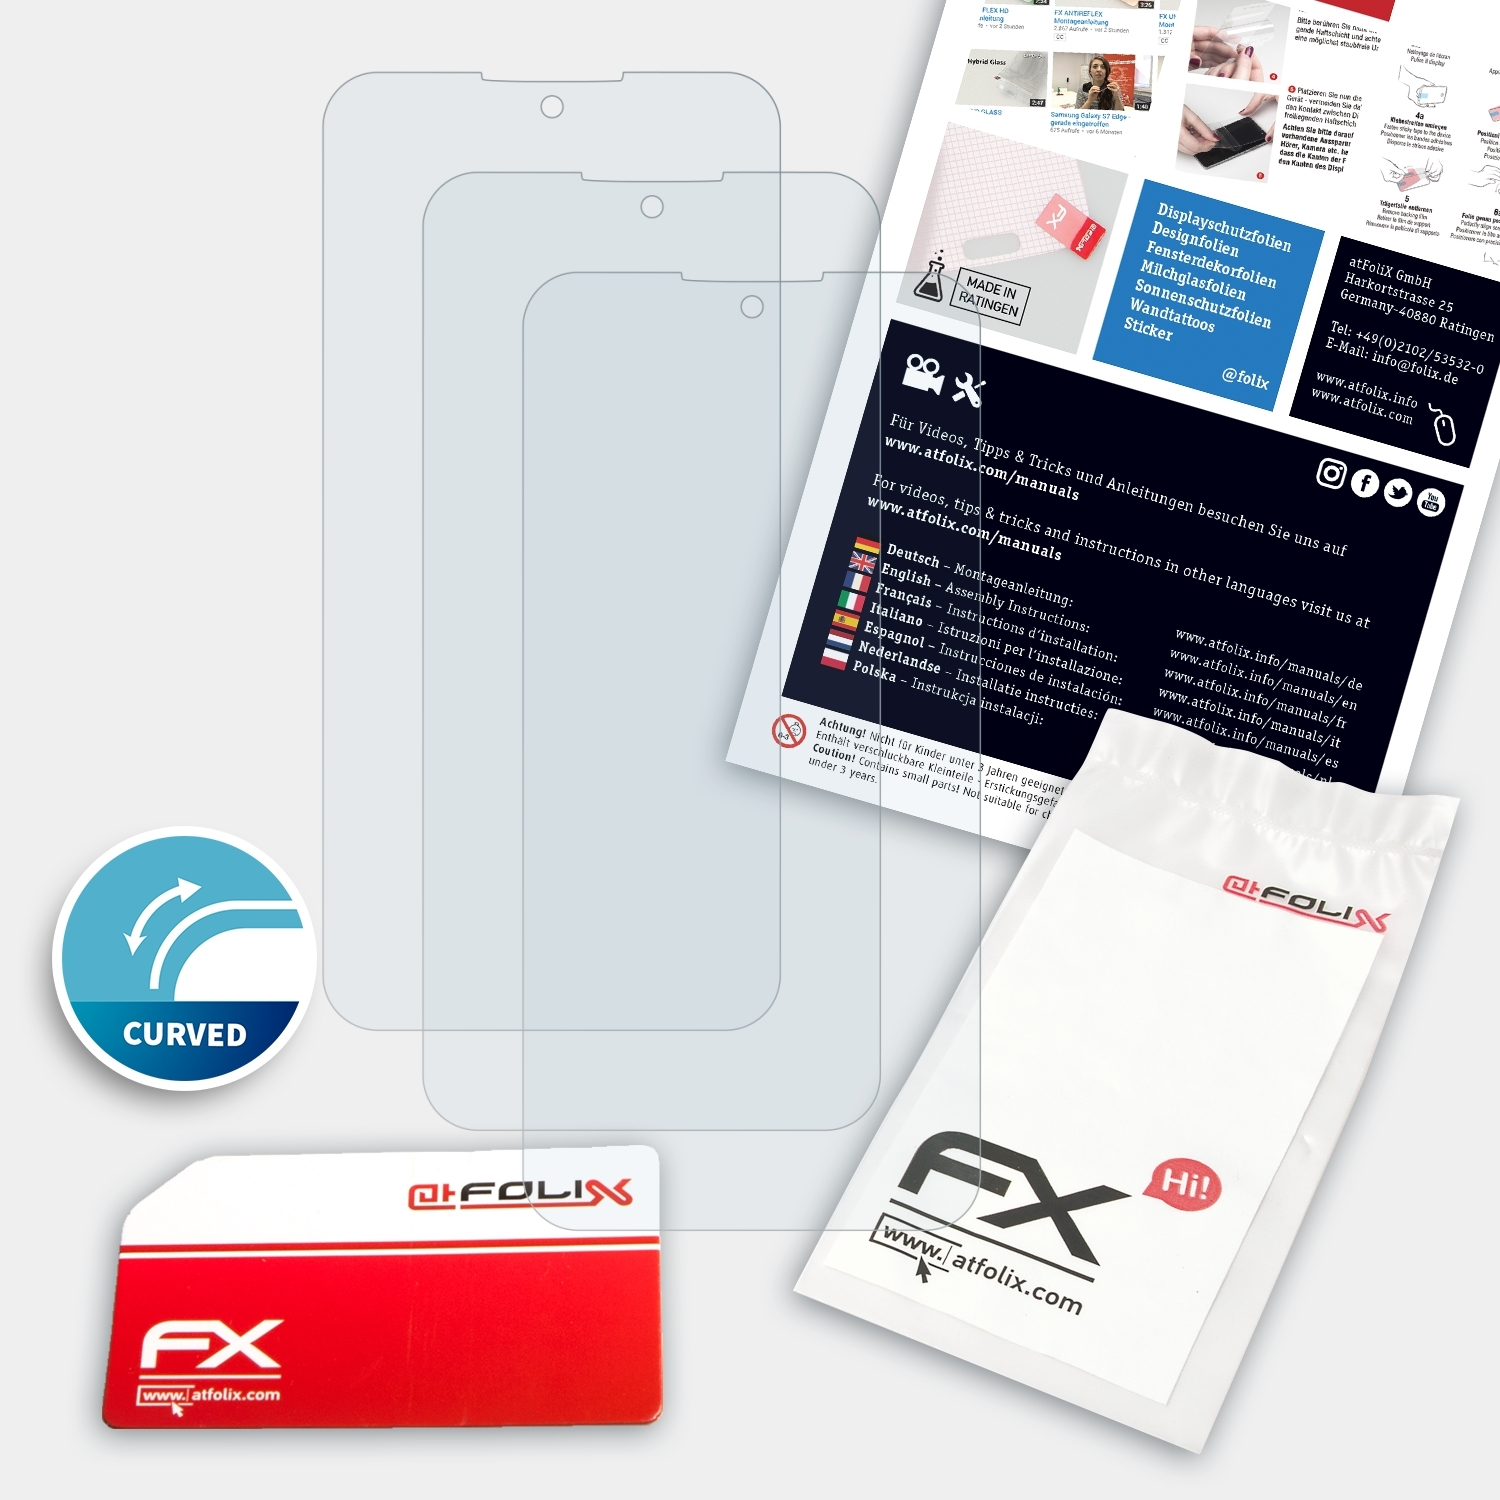 Max) 3x Honor ATFOLIX 8X FX-ActiFleX Displayschutz(für Huawei